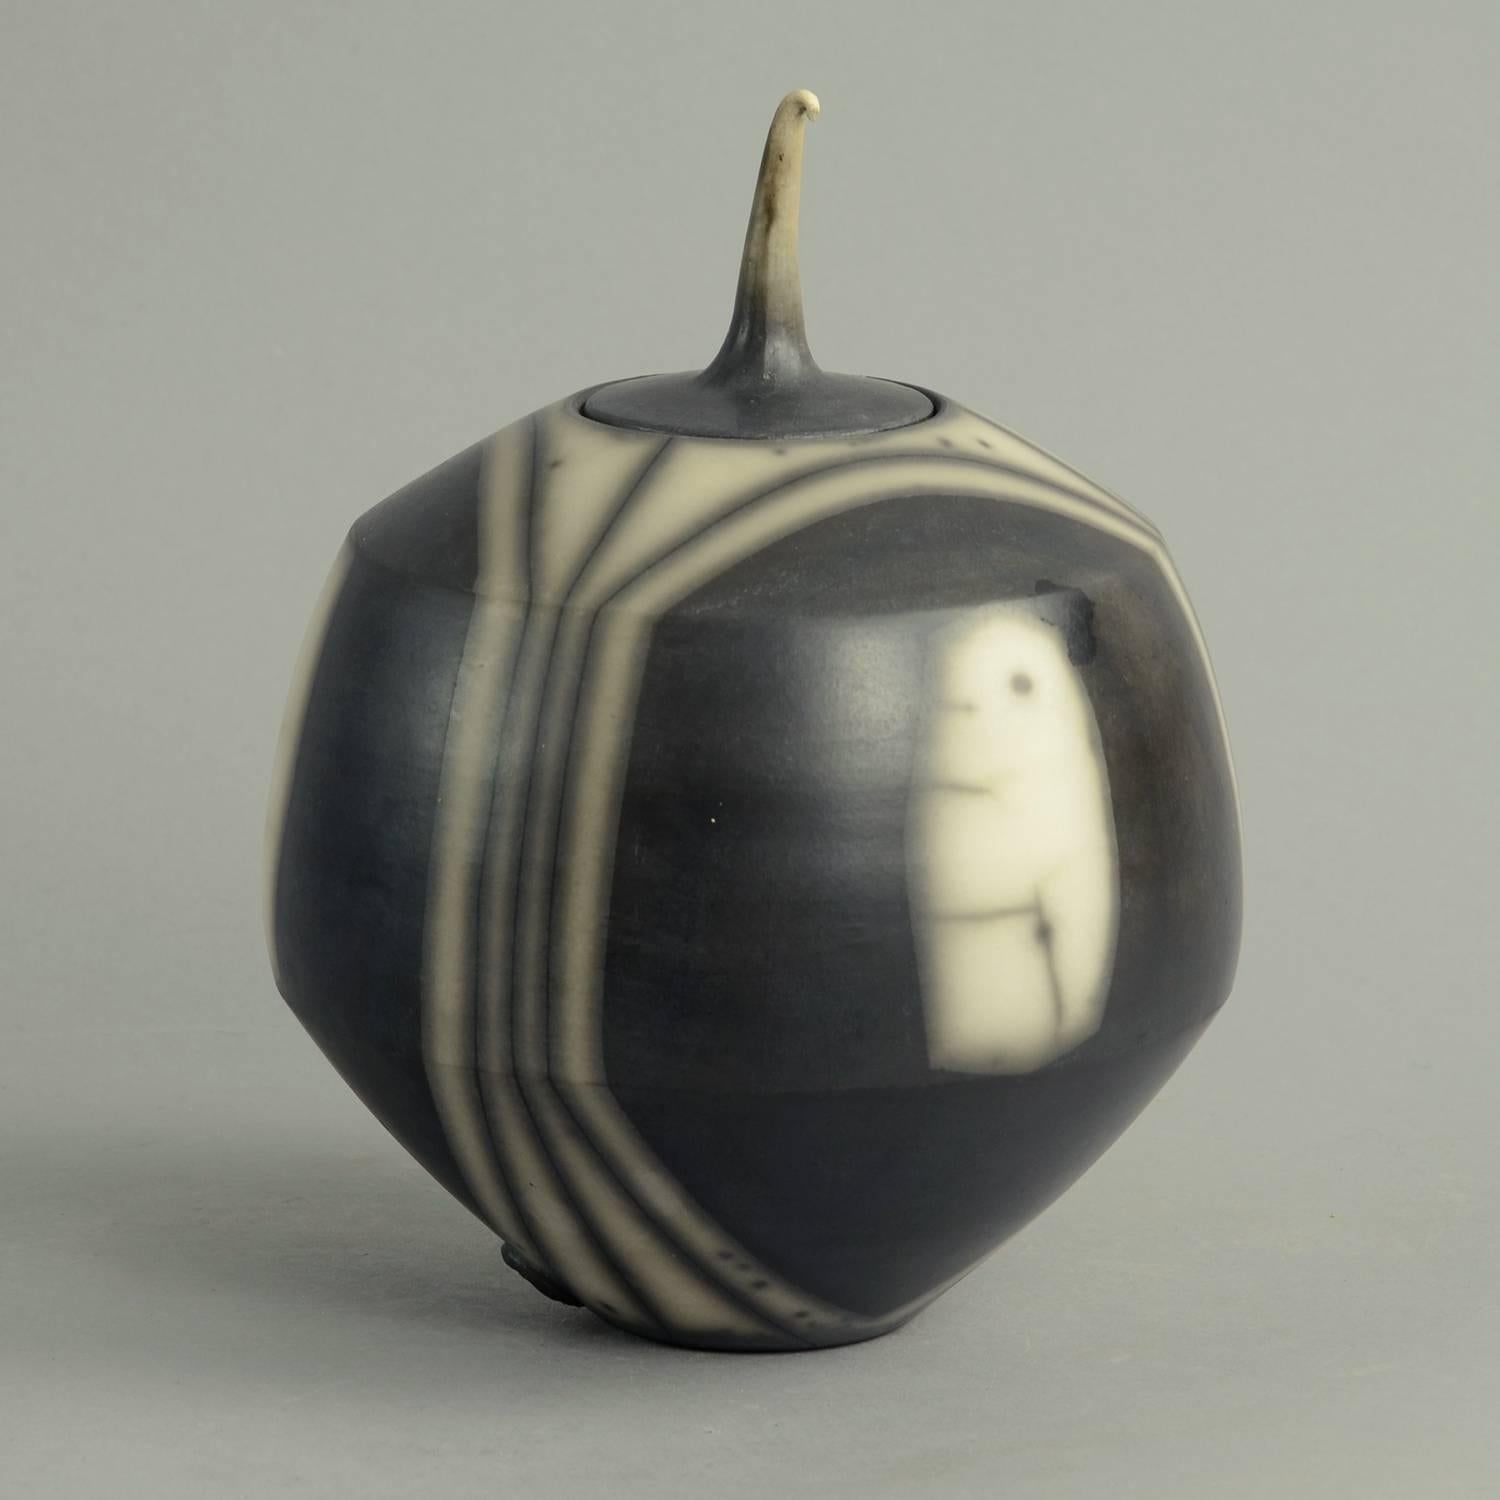 Tim Andrews, own studio, UK.

Unique, smoke-fired, burnished stoneware raku lidded jar in black and white slip.
Measures: Height 8 1/2